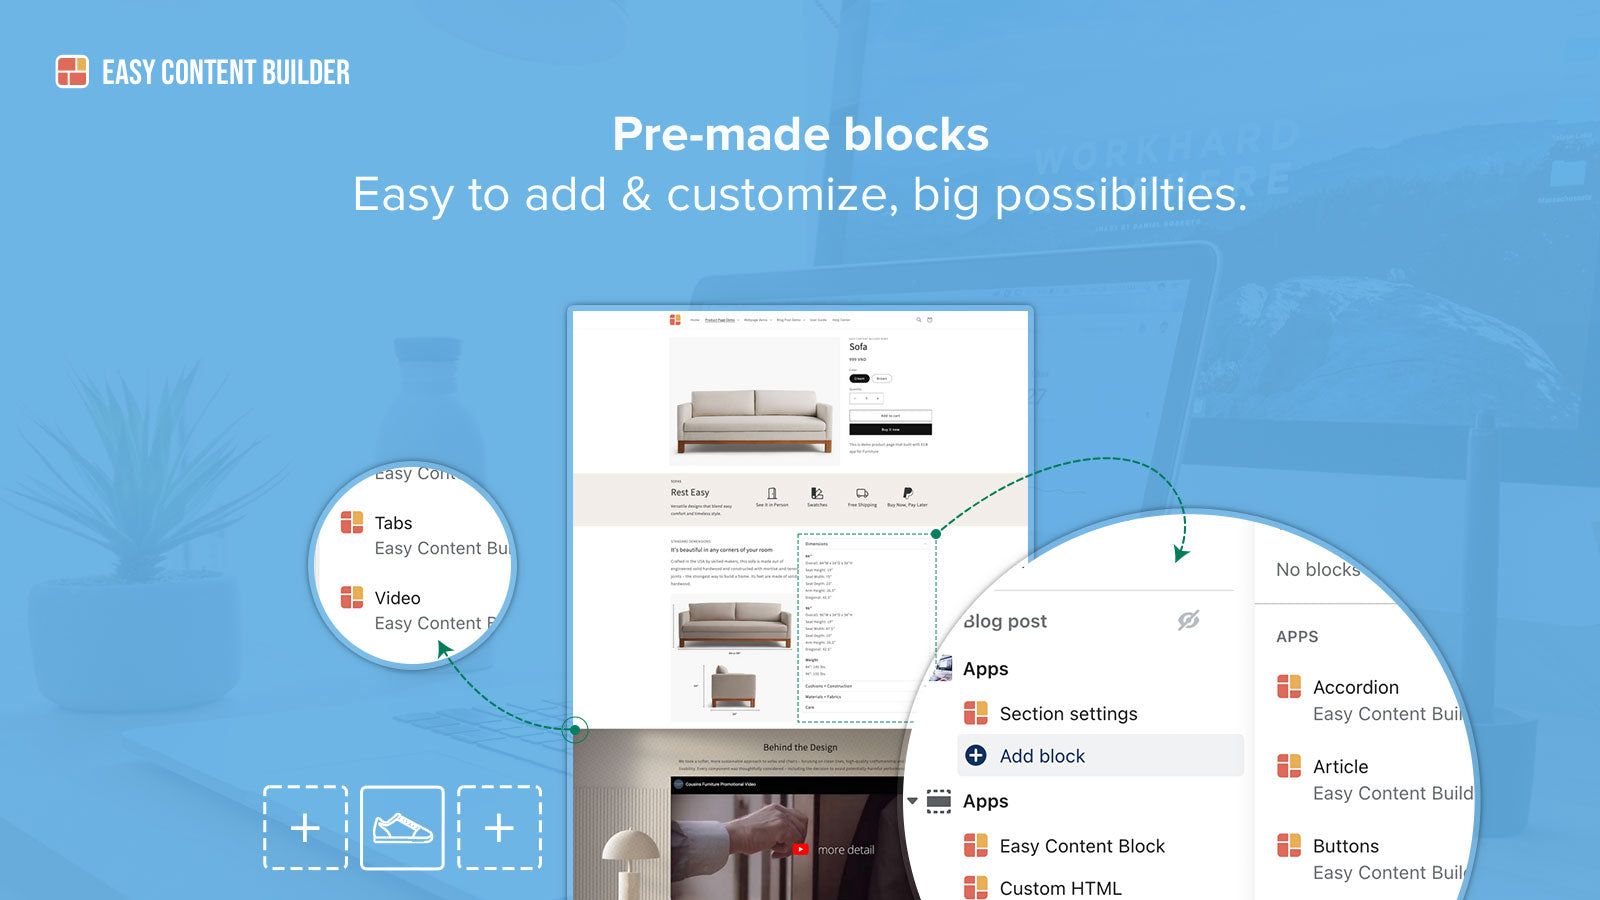 Prebuilt blocks - easy to add, edit, reorder. Big possibilities.